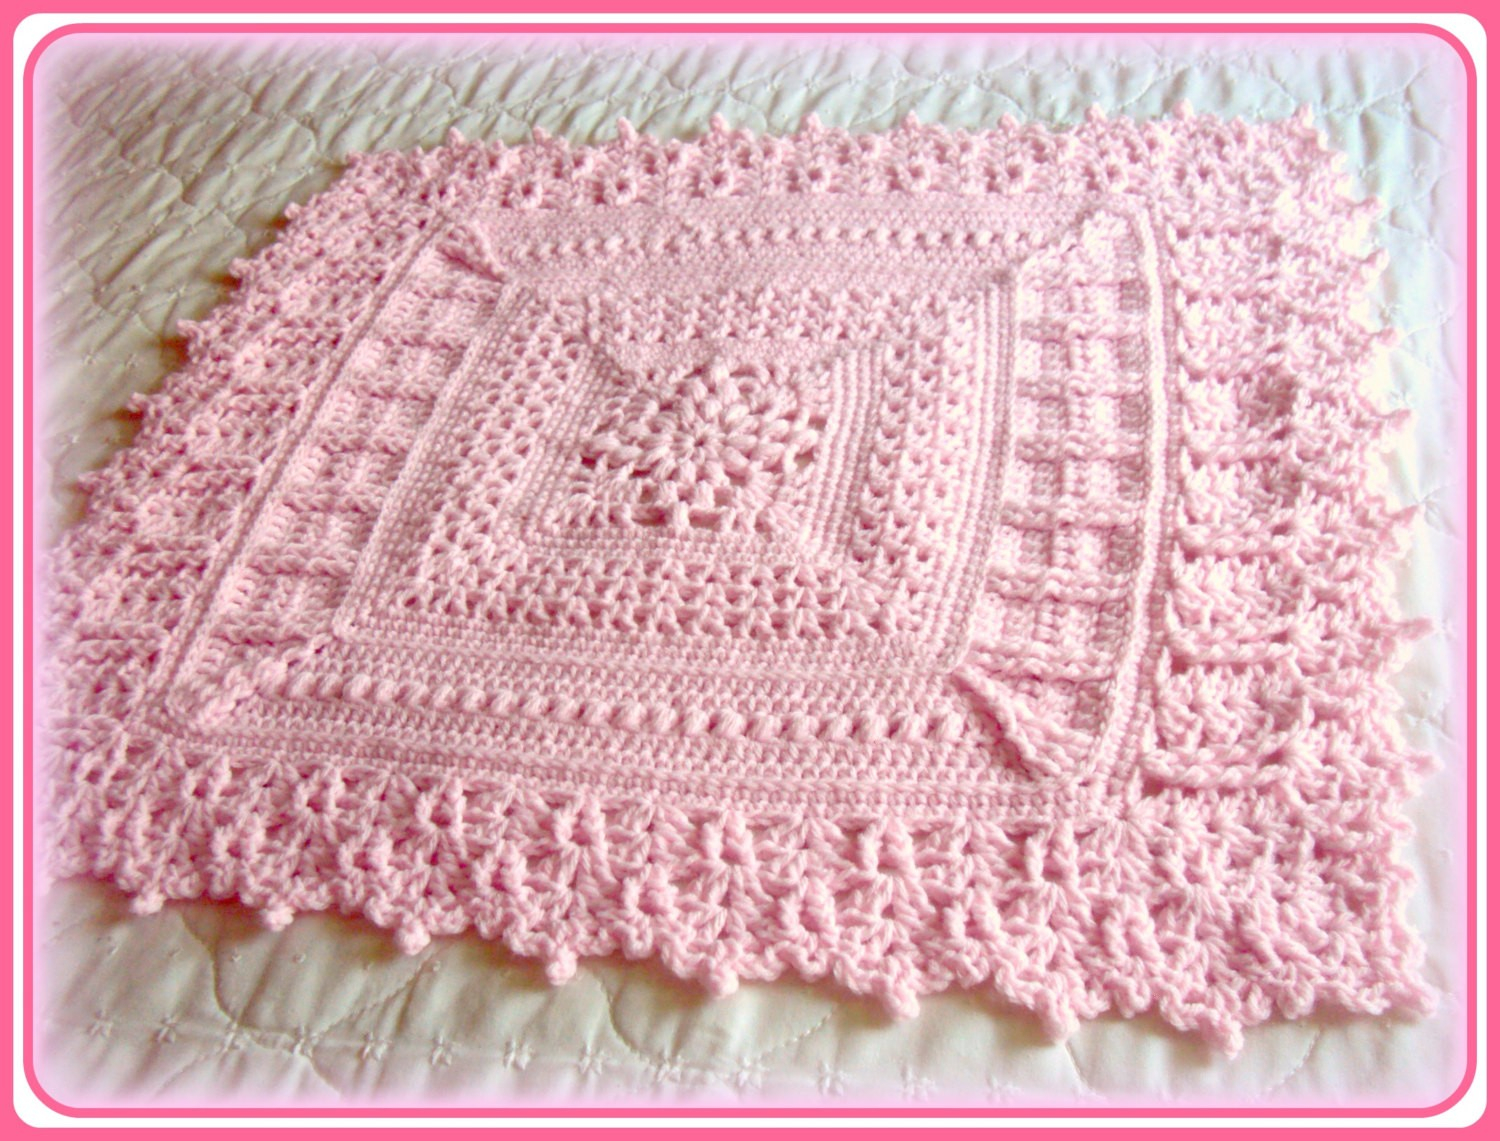 Crochet Baby Blanket Free Pattern Ba Blankets Patterns Free Crochet Blanket For Beginners And Knit